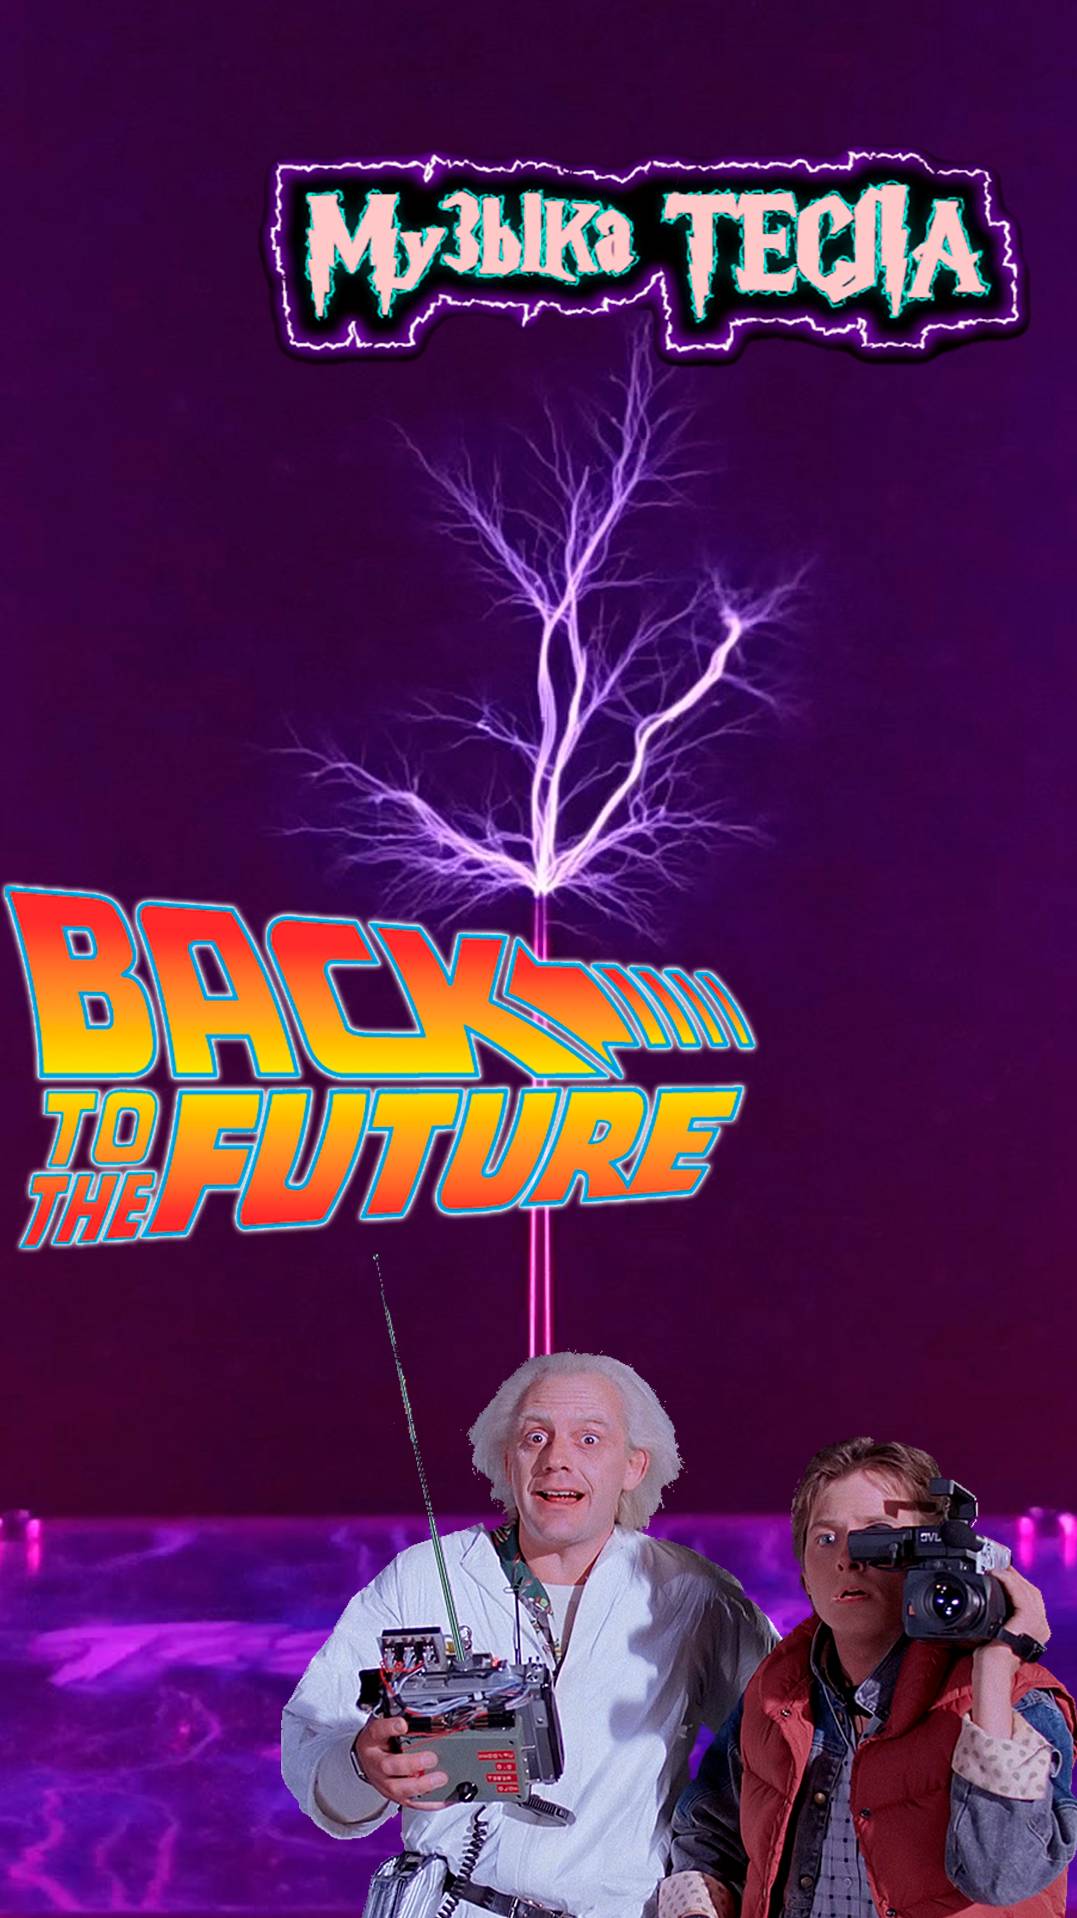 The Back to the Future Theme Tesla Coil Mix #музыкатесла